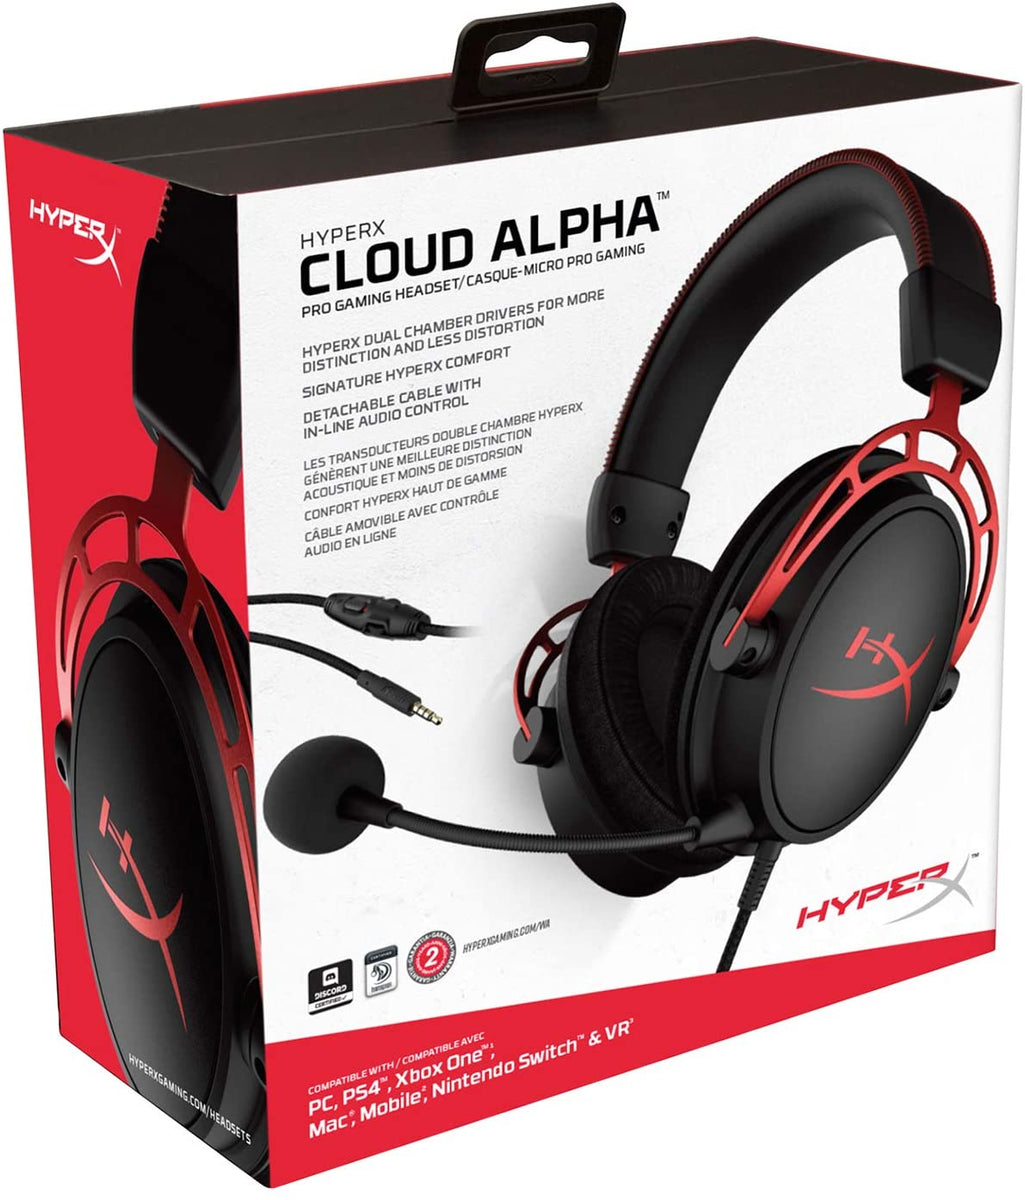 HyperX Cloud Alpha Gaming Headset - TimTheTatMan Edition - Dual Chamber  Drivers, Memory Foam, Aluminum Frame, Detachable Microphone